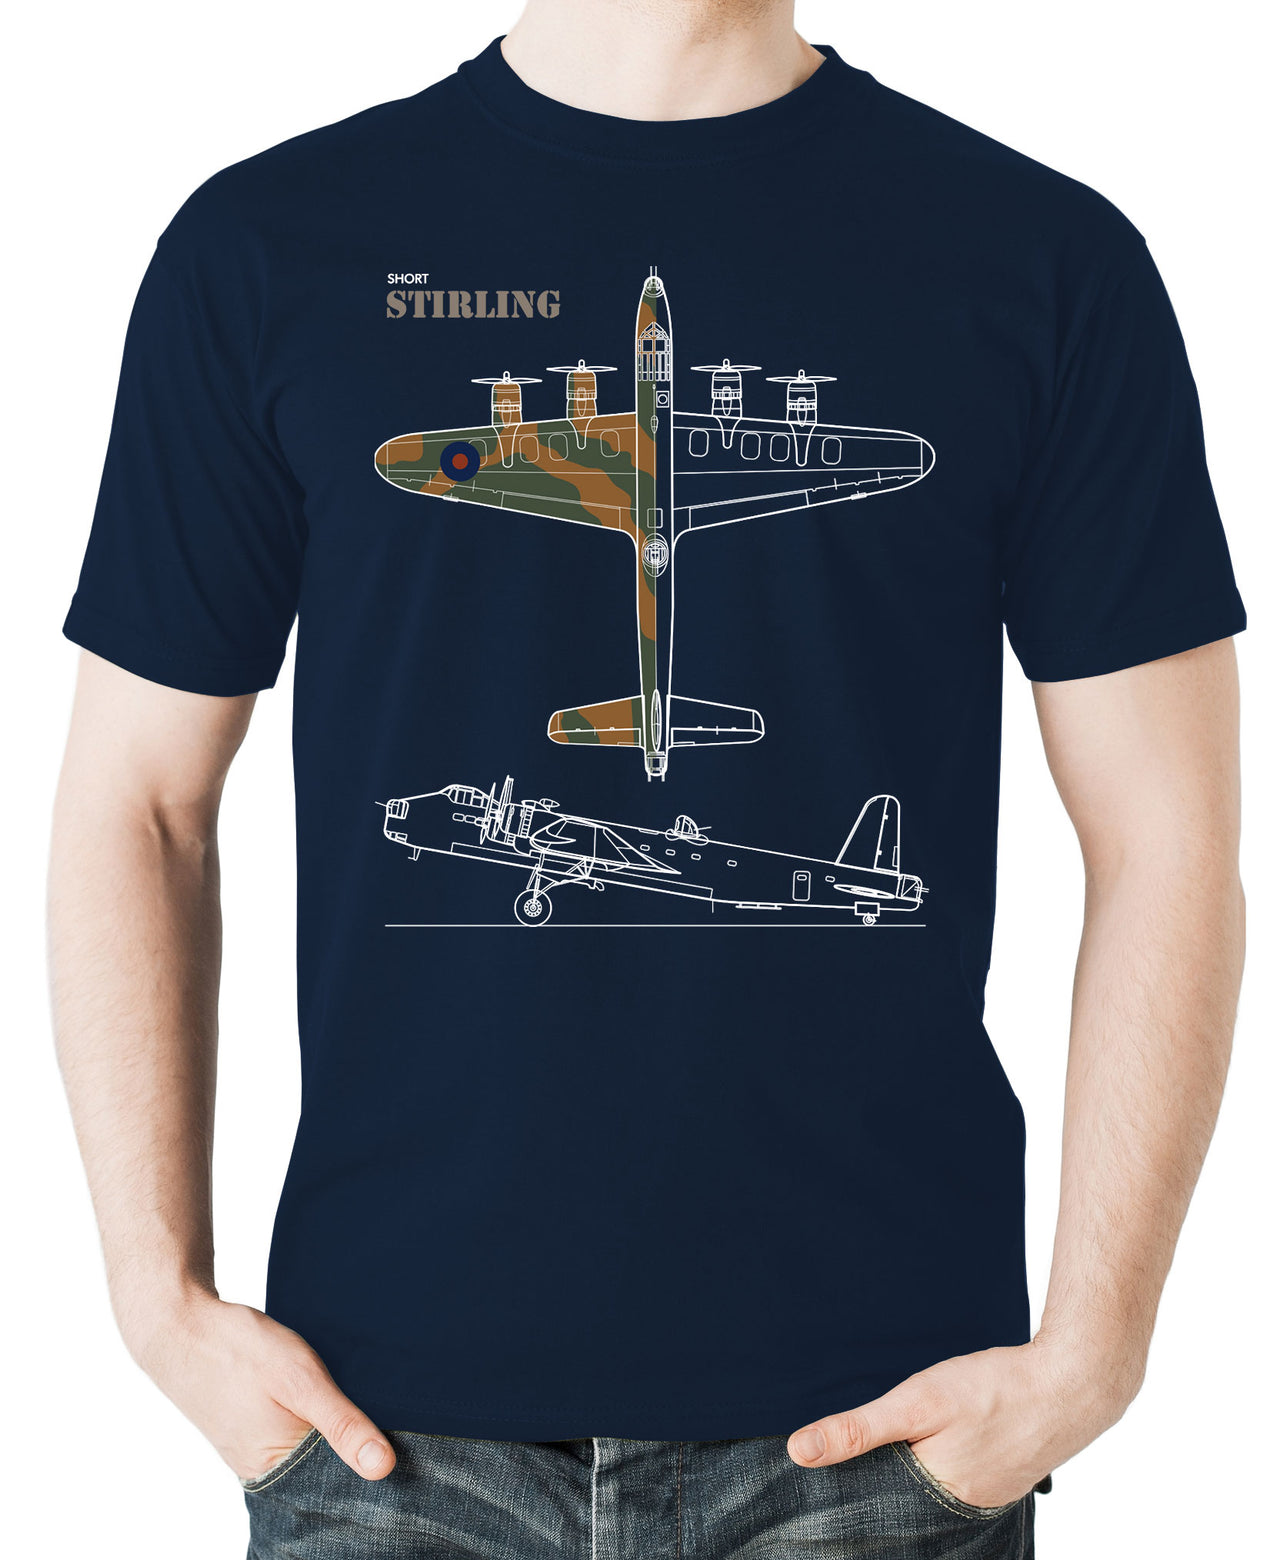 Stirling - T-shirt